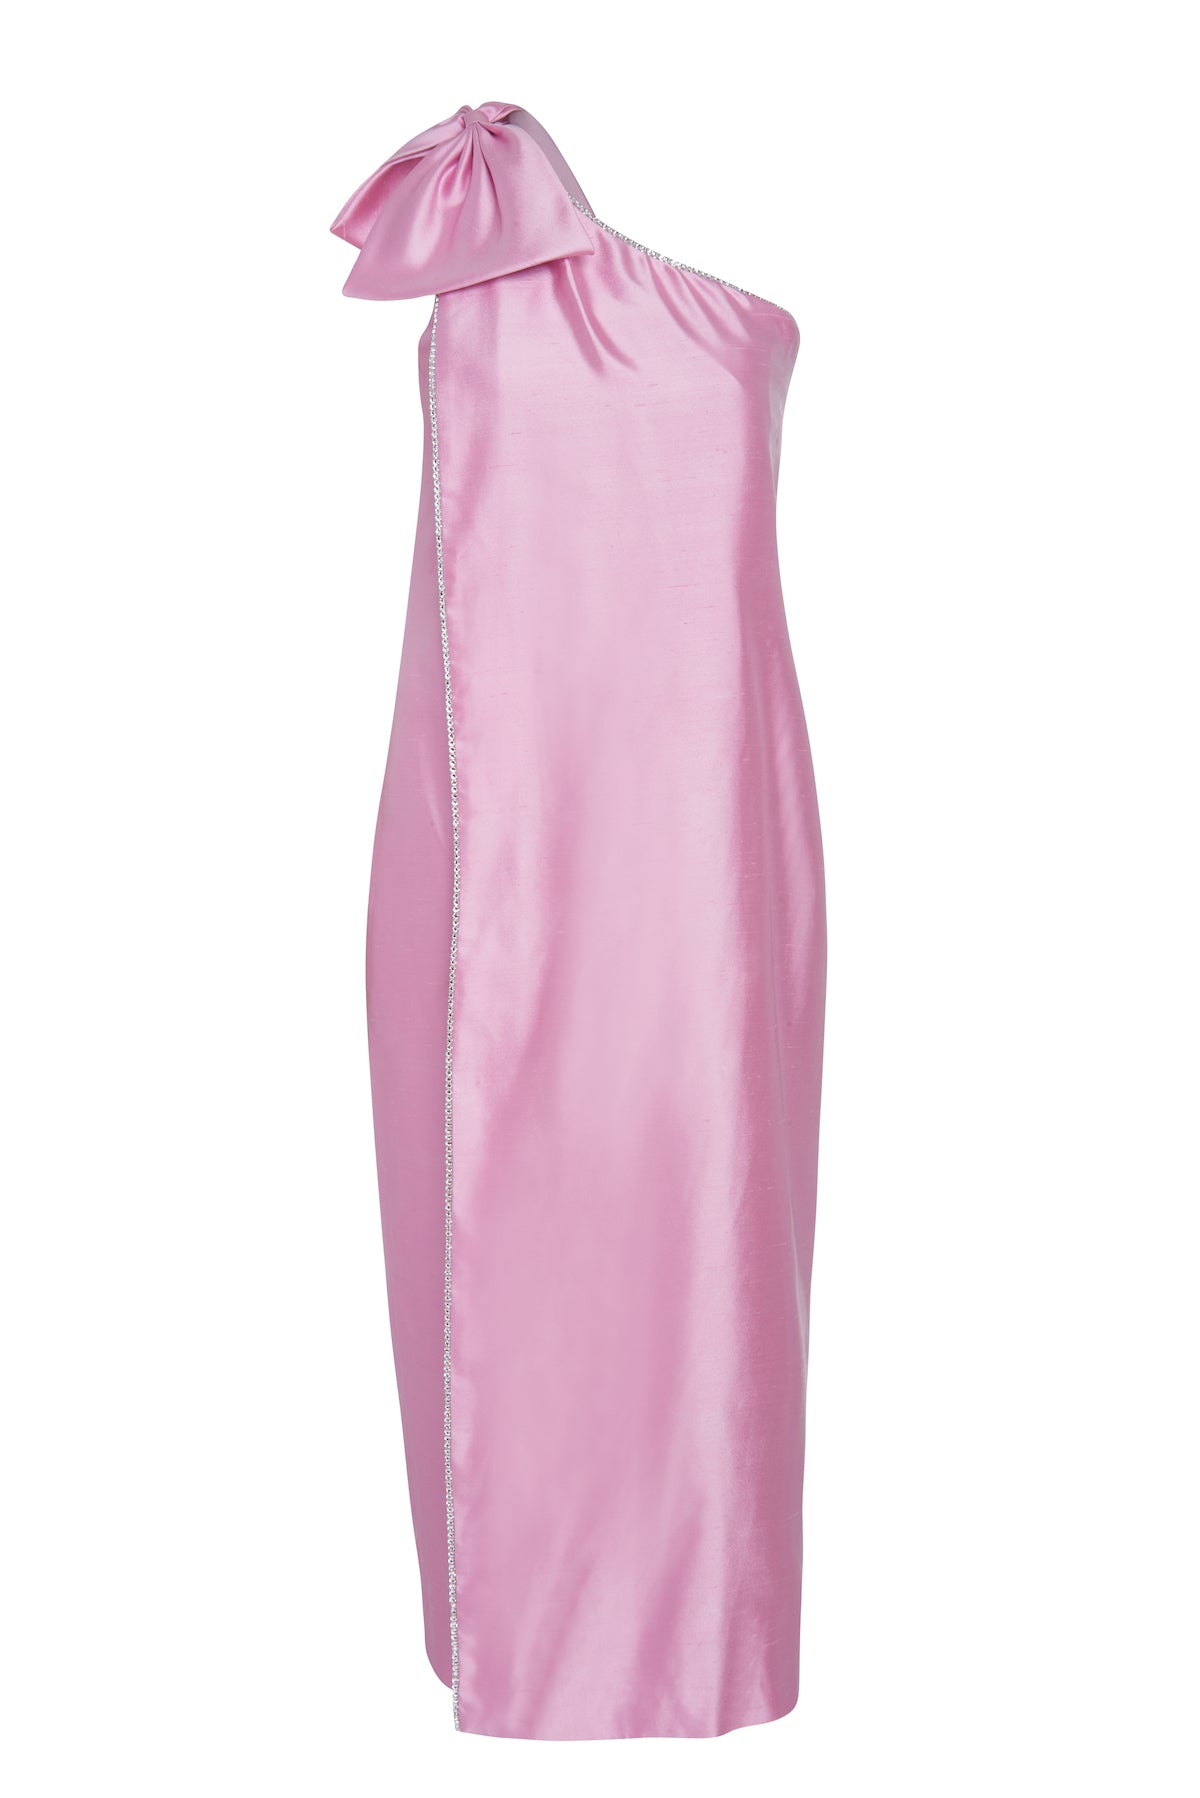 Melia Pink Silk One Shoulder Bow Dress with Crystal Trim